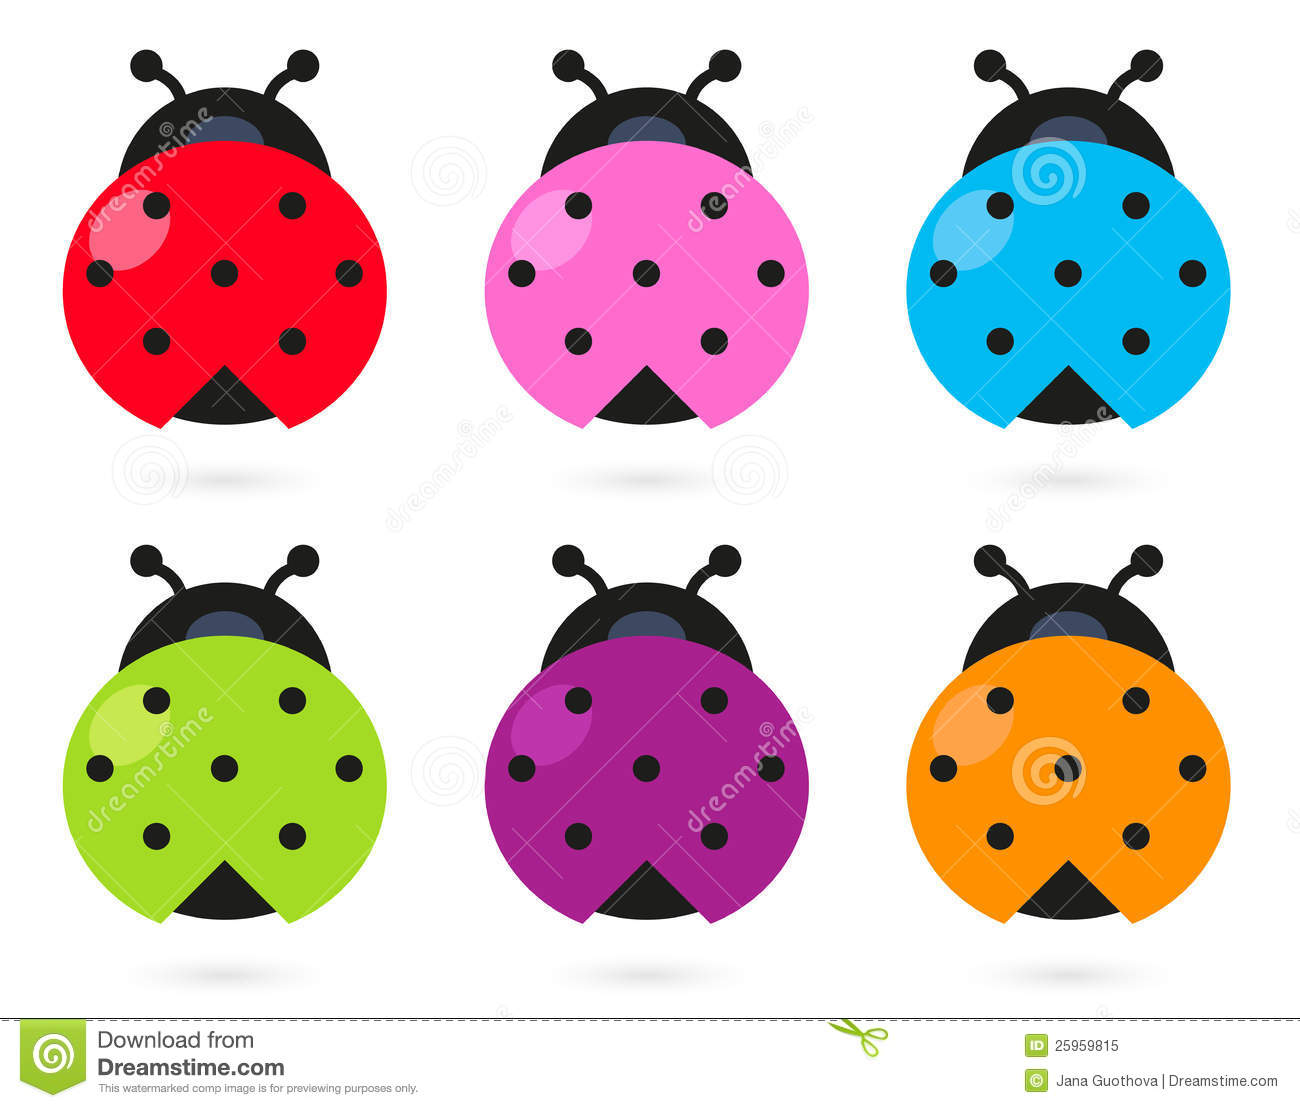 Cute Ladybug Drawings   Clipart Panda   Free Clipart Images